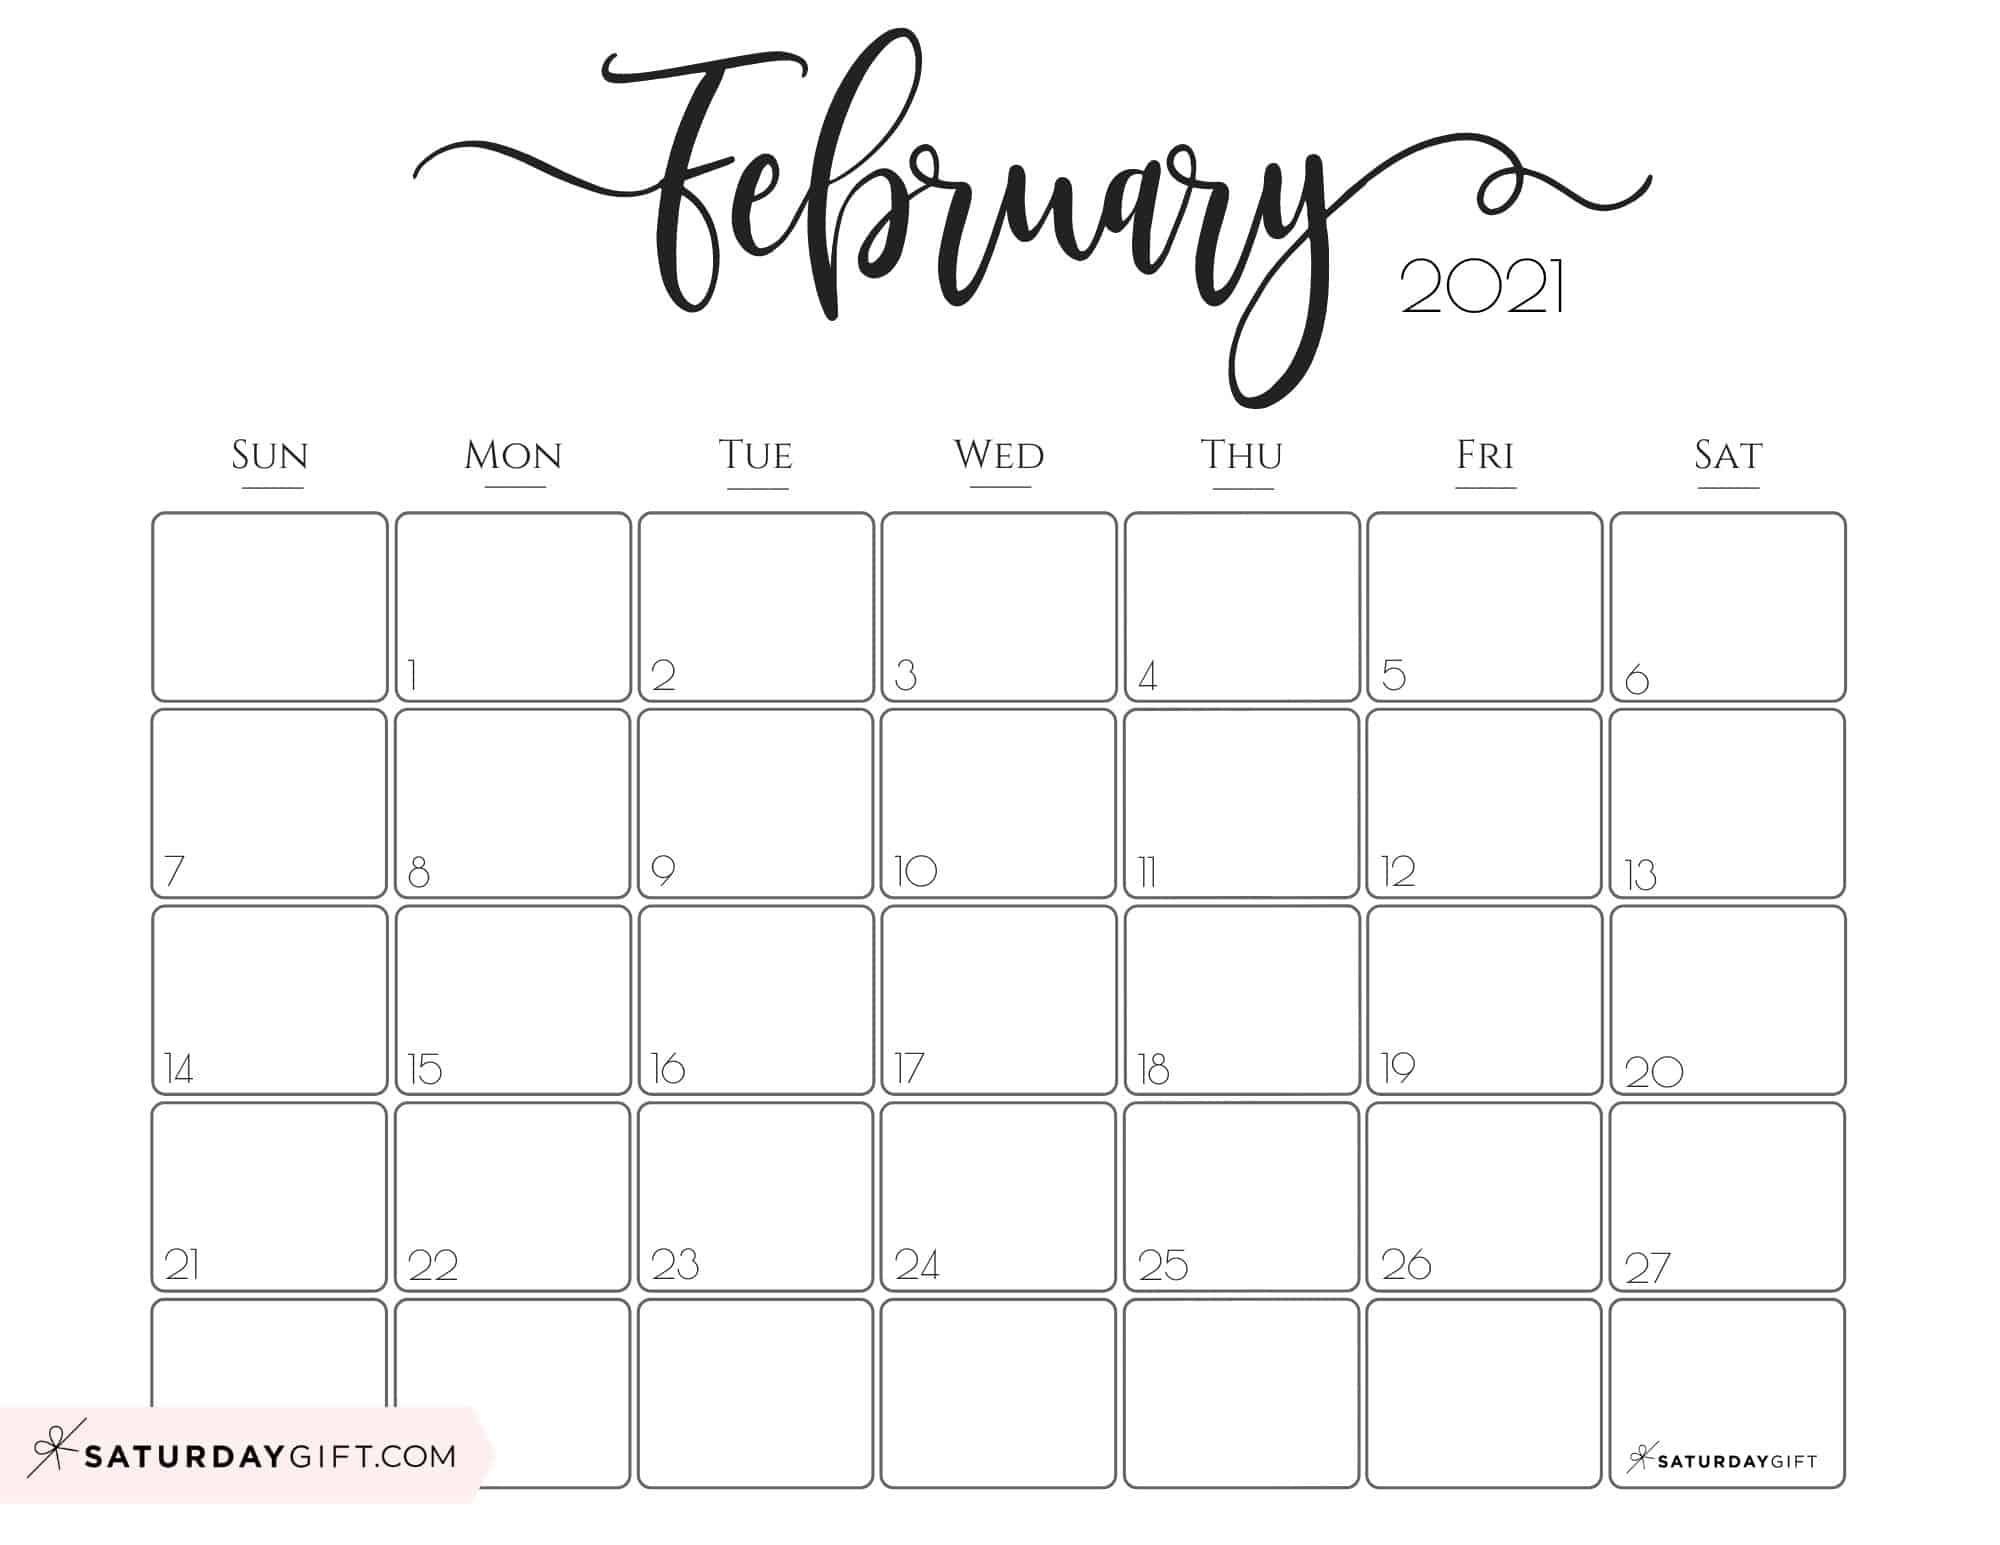 20 February 2021 Calendar Free Download Printable